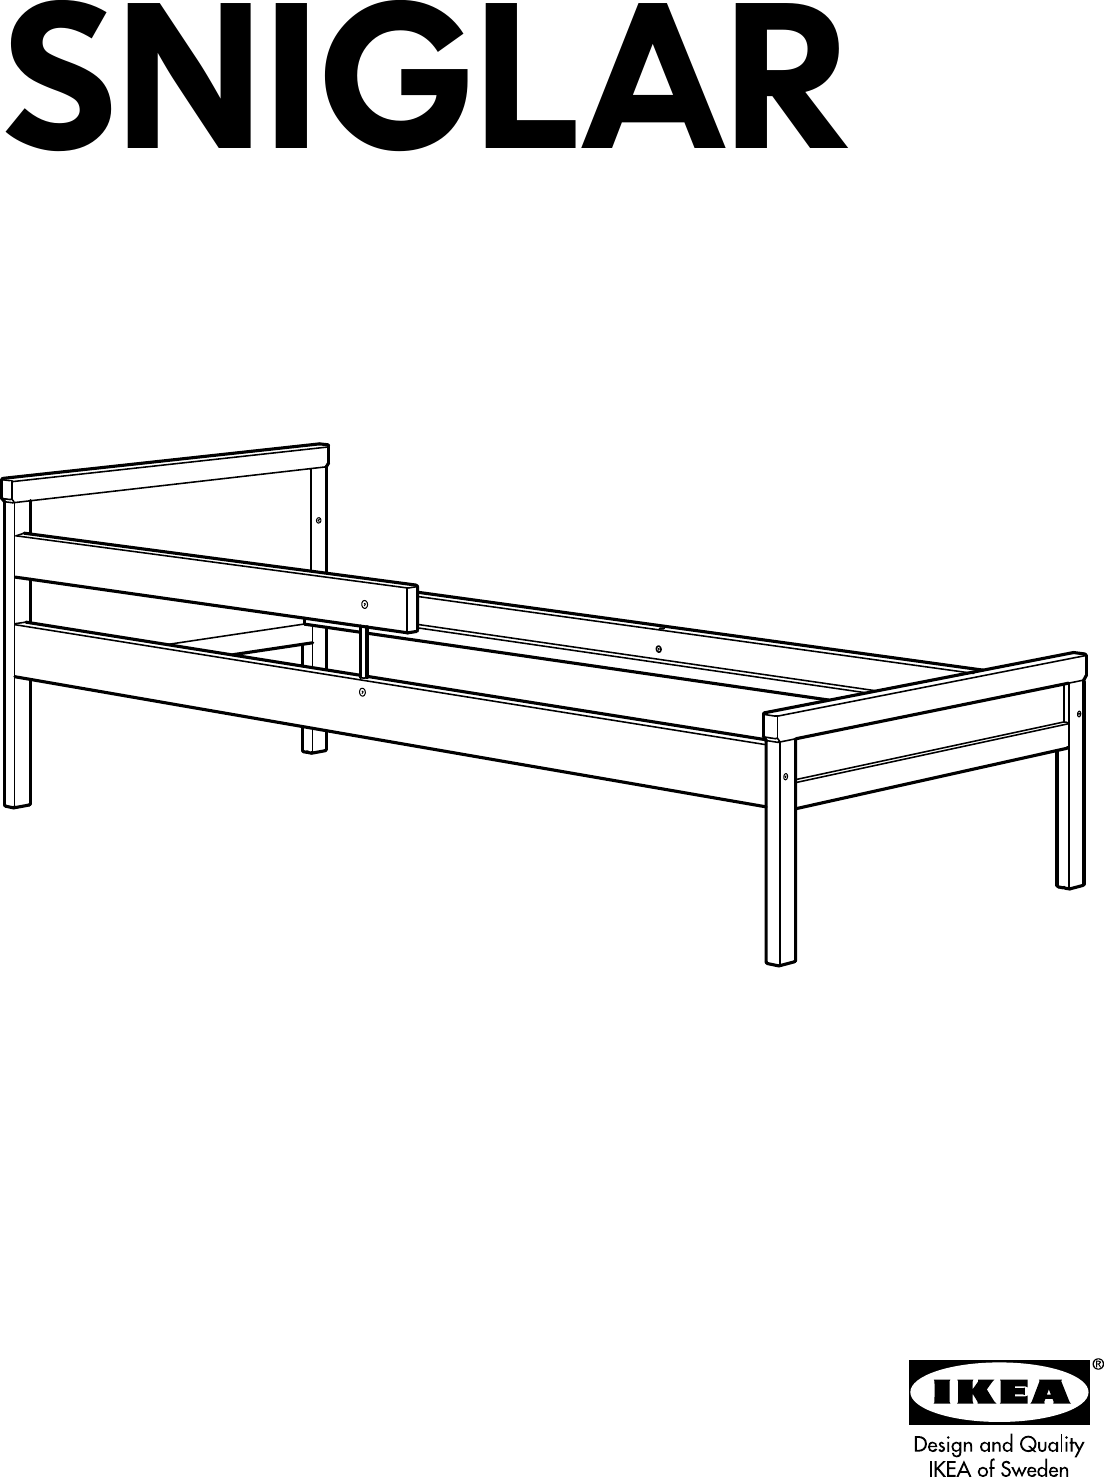 Page 1 of 8 - Ikea Ikea-Sniglar-Bed-Frame-W-Guide-Rail-Assembly-Instruction